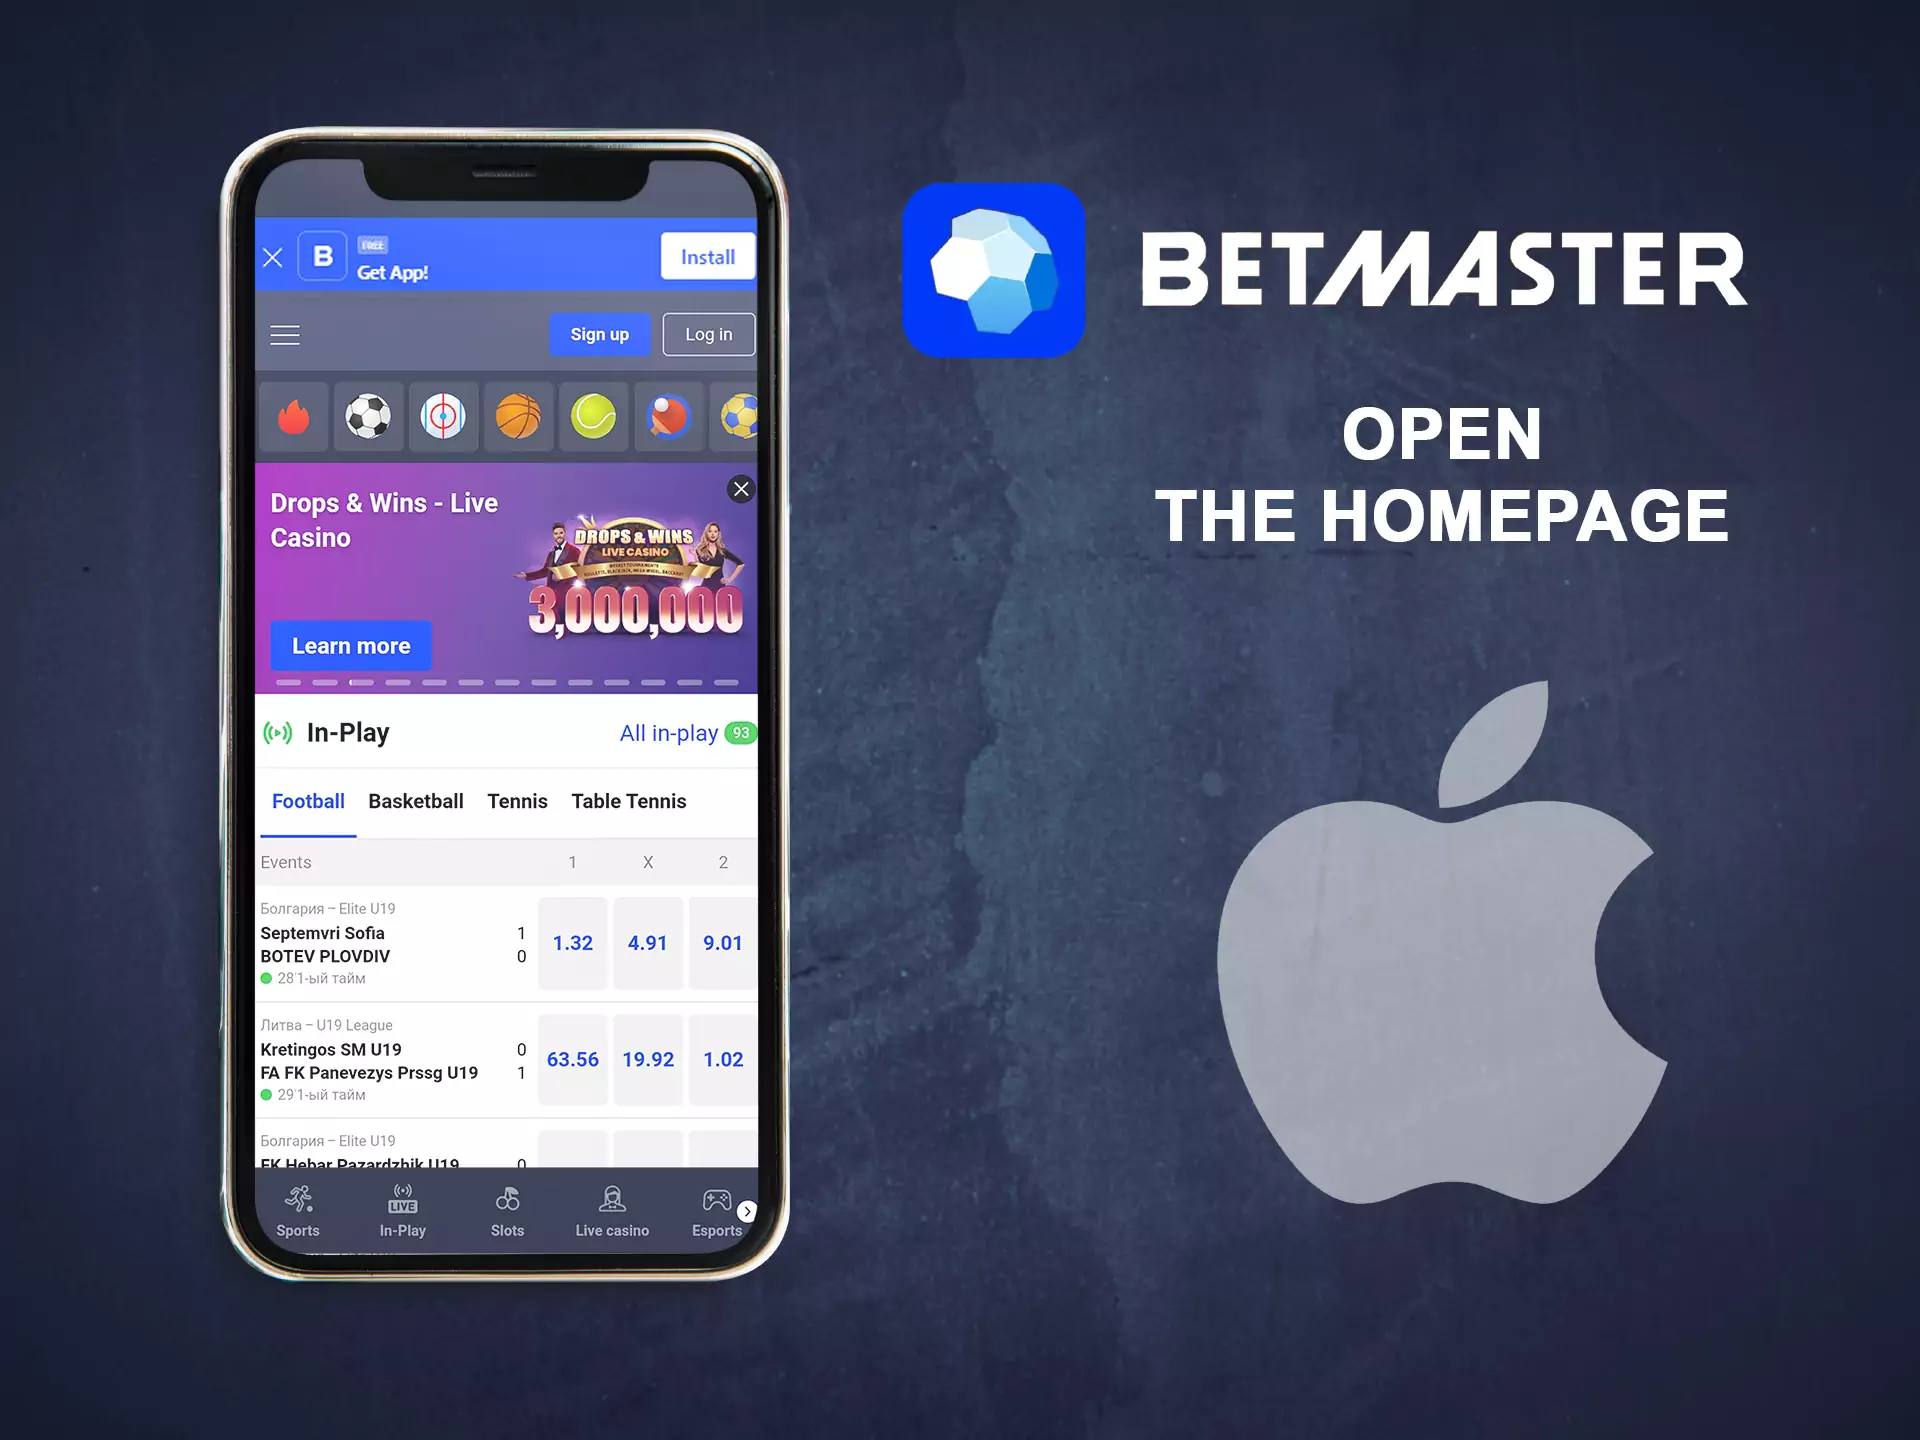 Open the website of Betmaster.